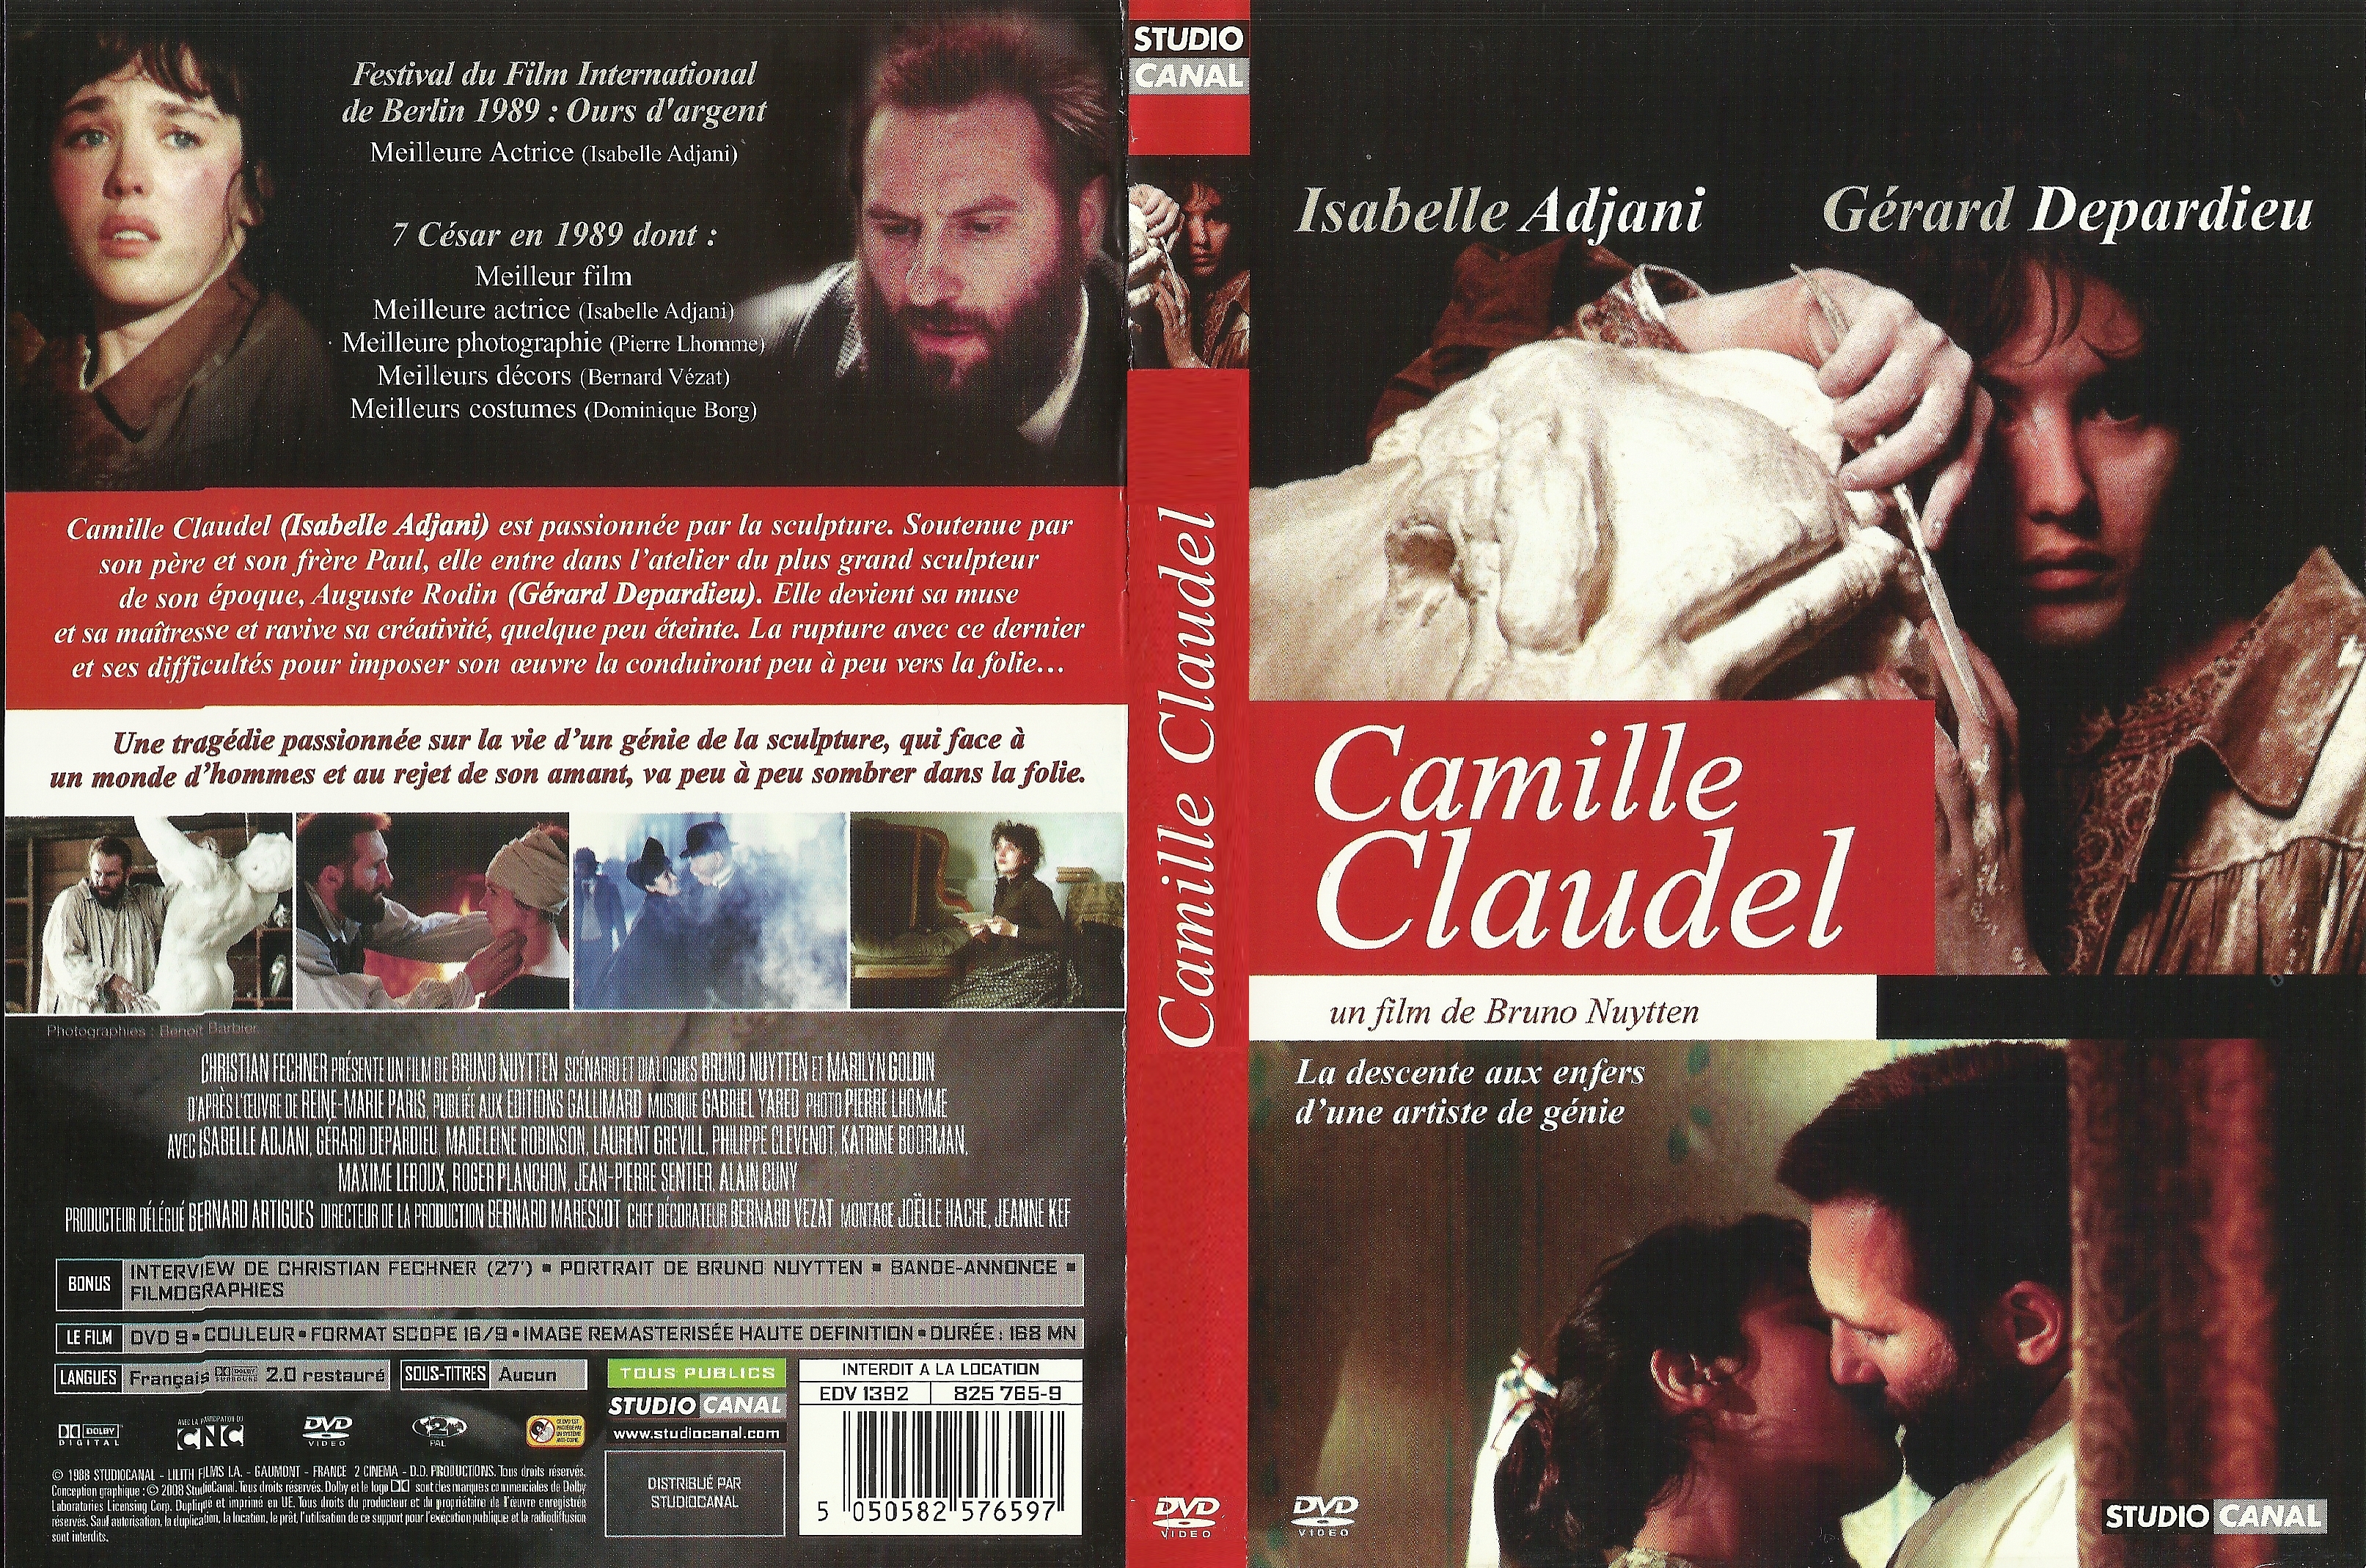 Jaquette DVD Camille Claudel v2